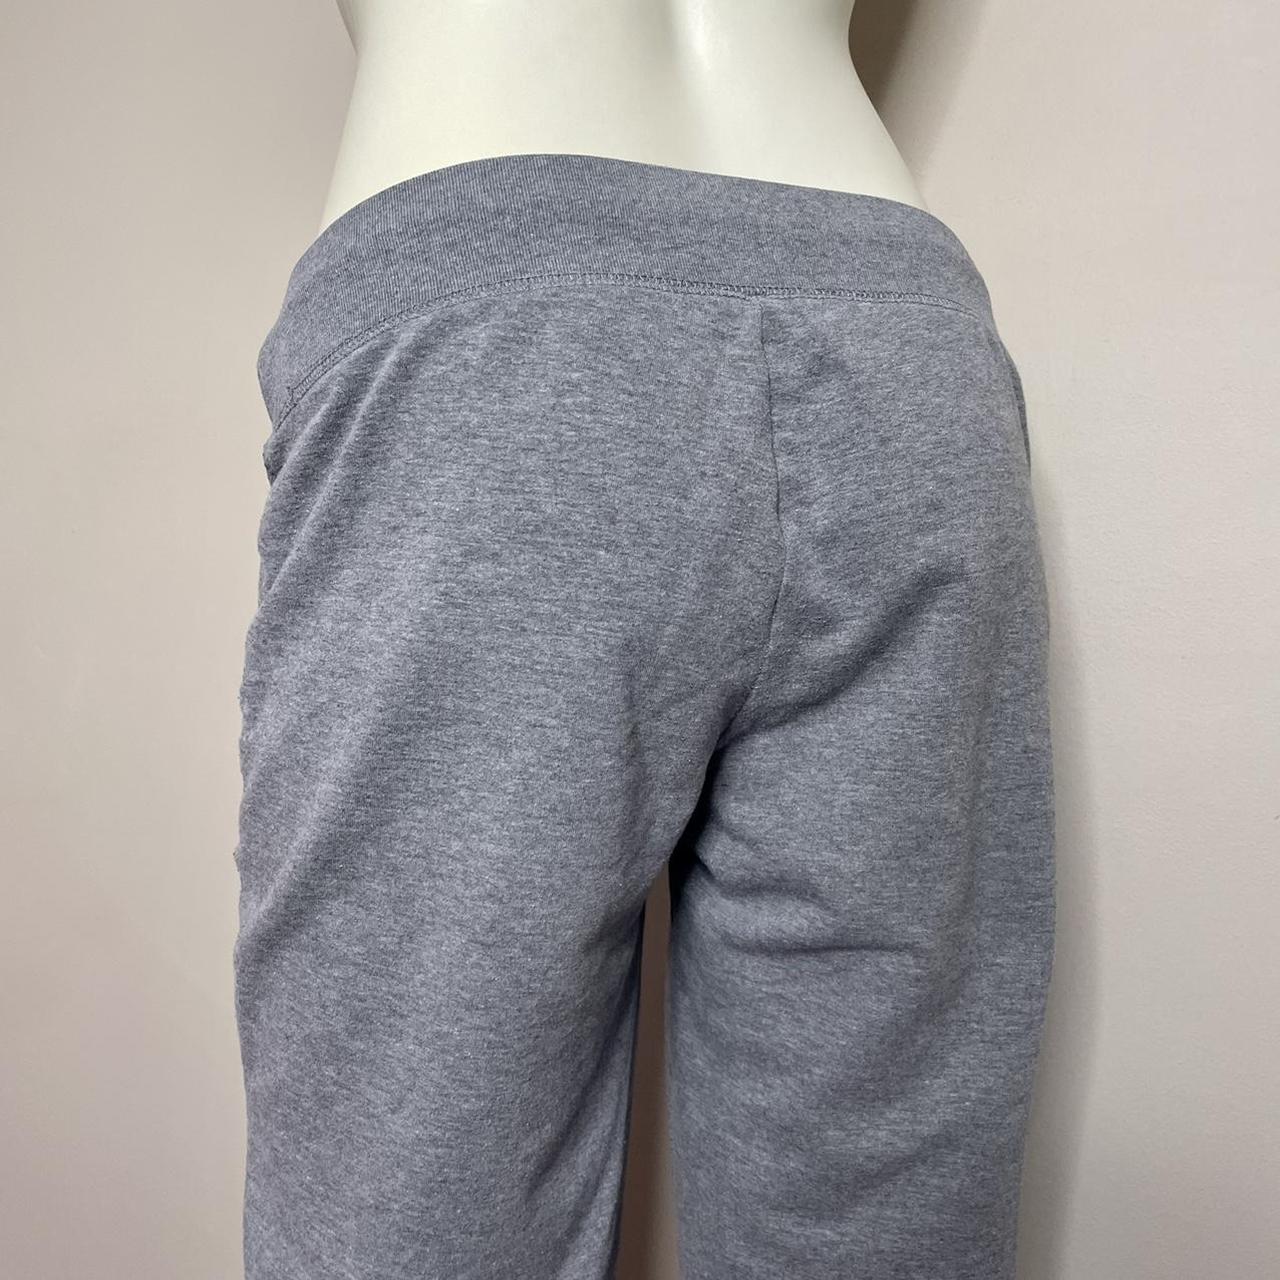 Vintage 2000s gray flare sweatpants by... - Depop